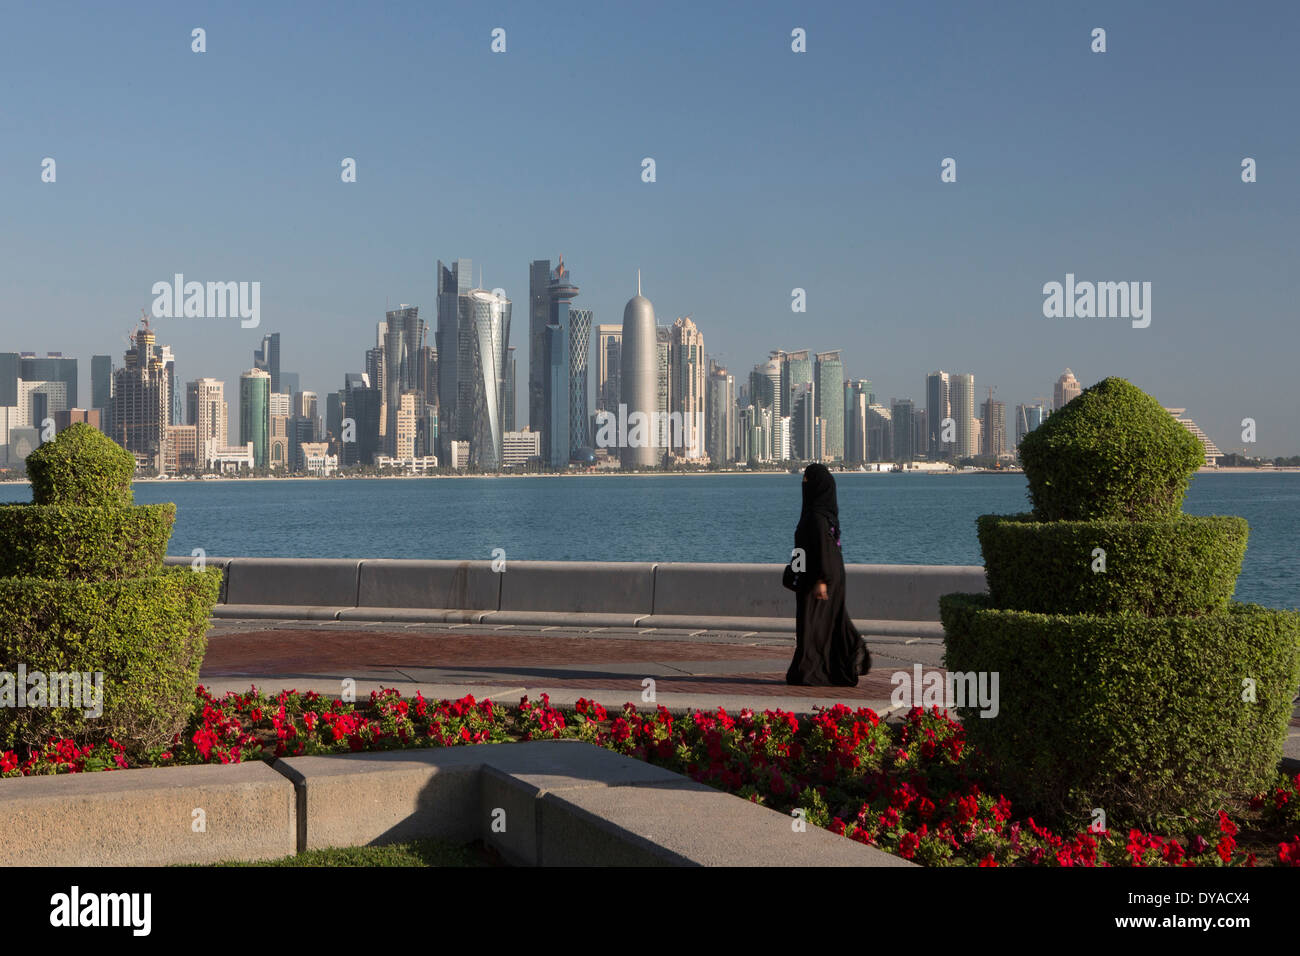 Al Bidda Burj Doha Katar Nahost World Trade Center Skyline der Architektur Bay Stadt bunte Corniche futuristische promenade Stockfoto